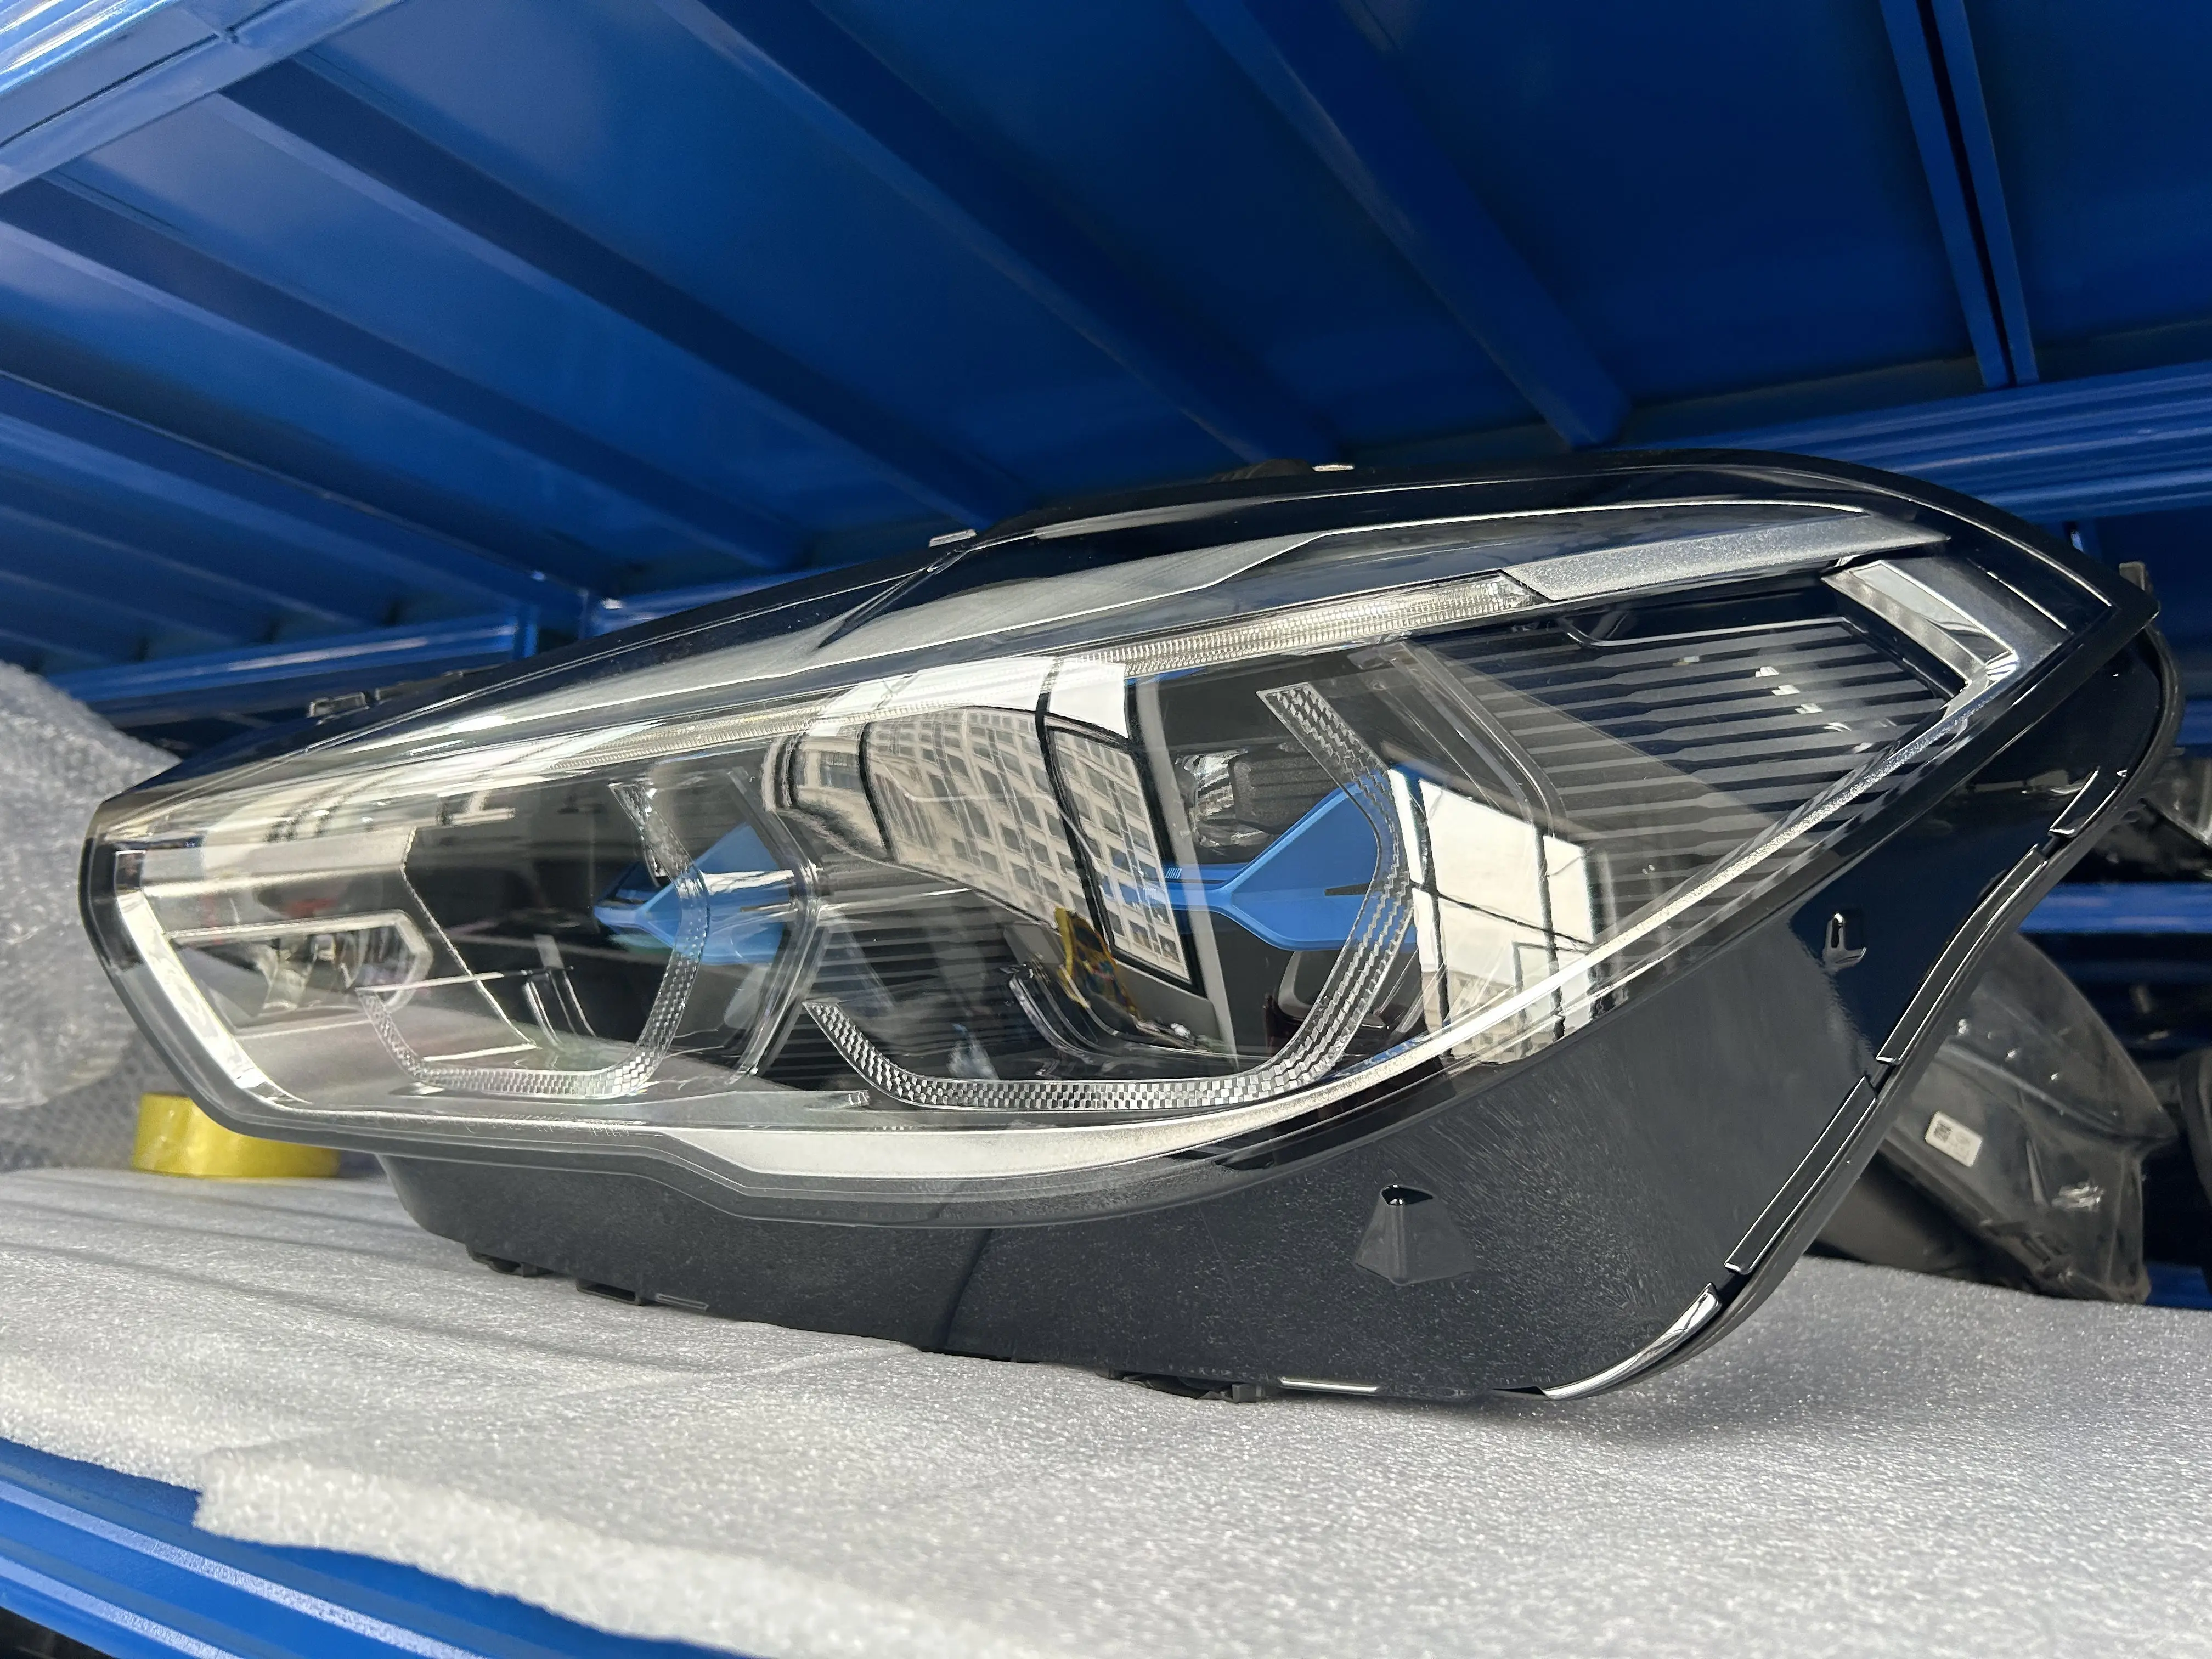 

Original 2019 2020 Headlights for Cars X5 Light Lamp 10000lm 400w H4 H11 H7 Car Led Headlight for X5